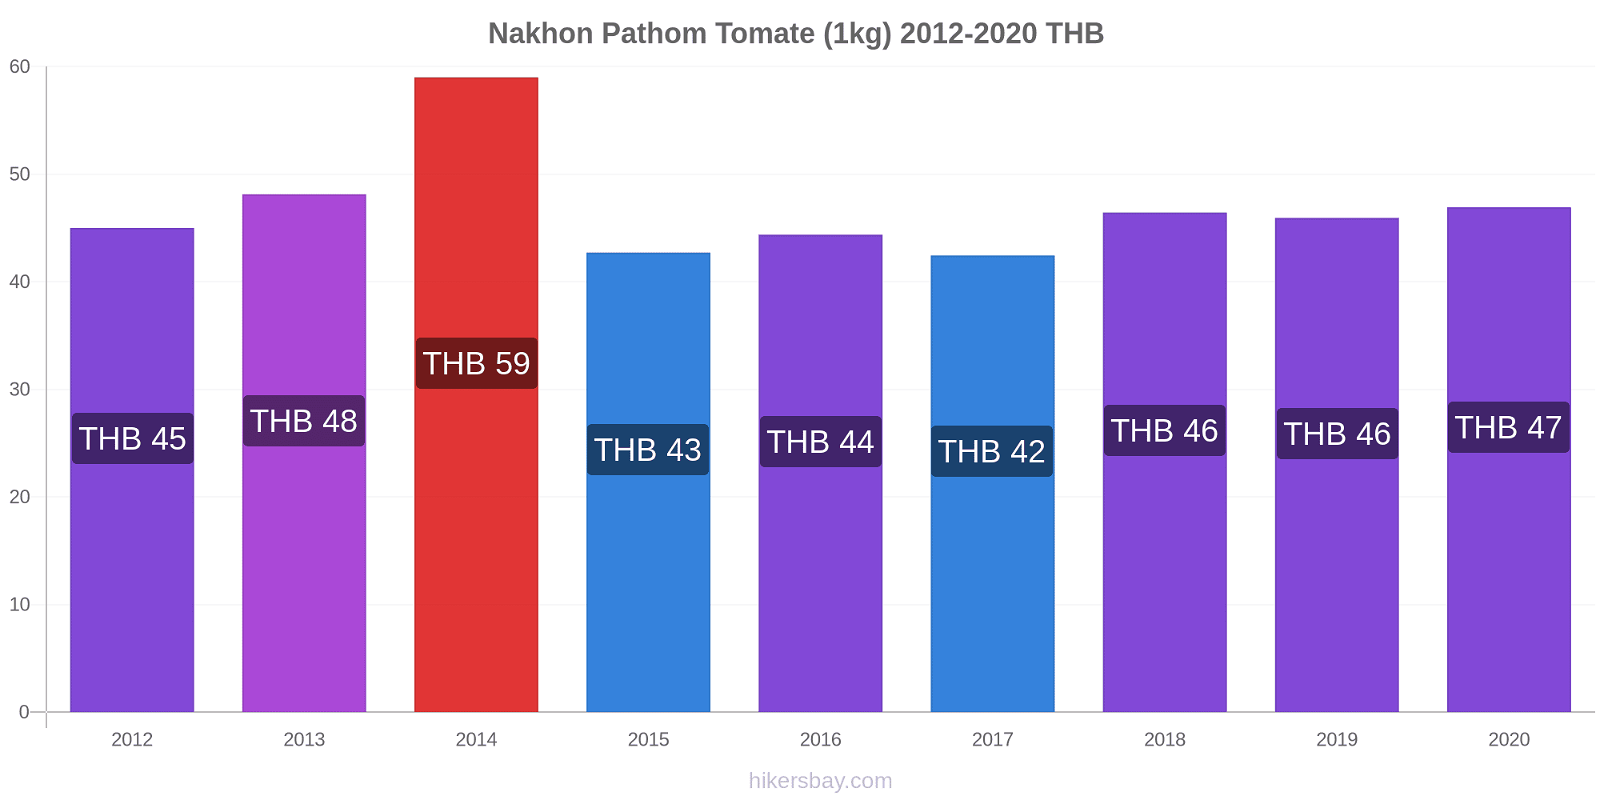 Nakhon Pathom changements de prix Tomate (1kg) hikersbay.com